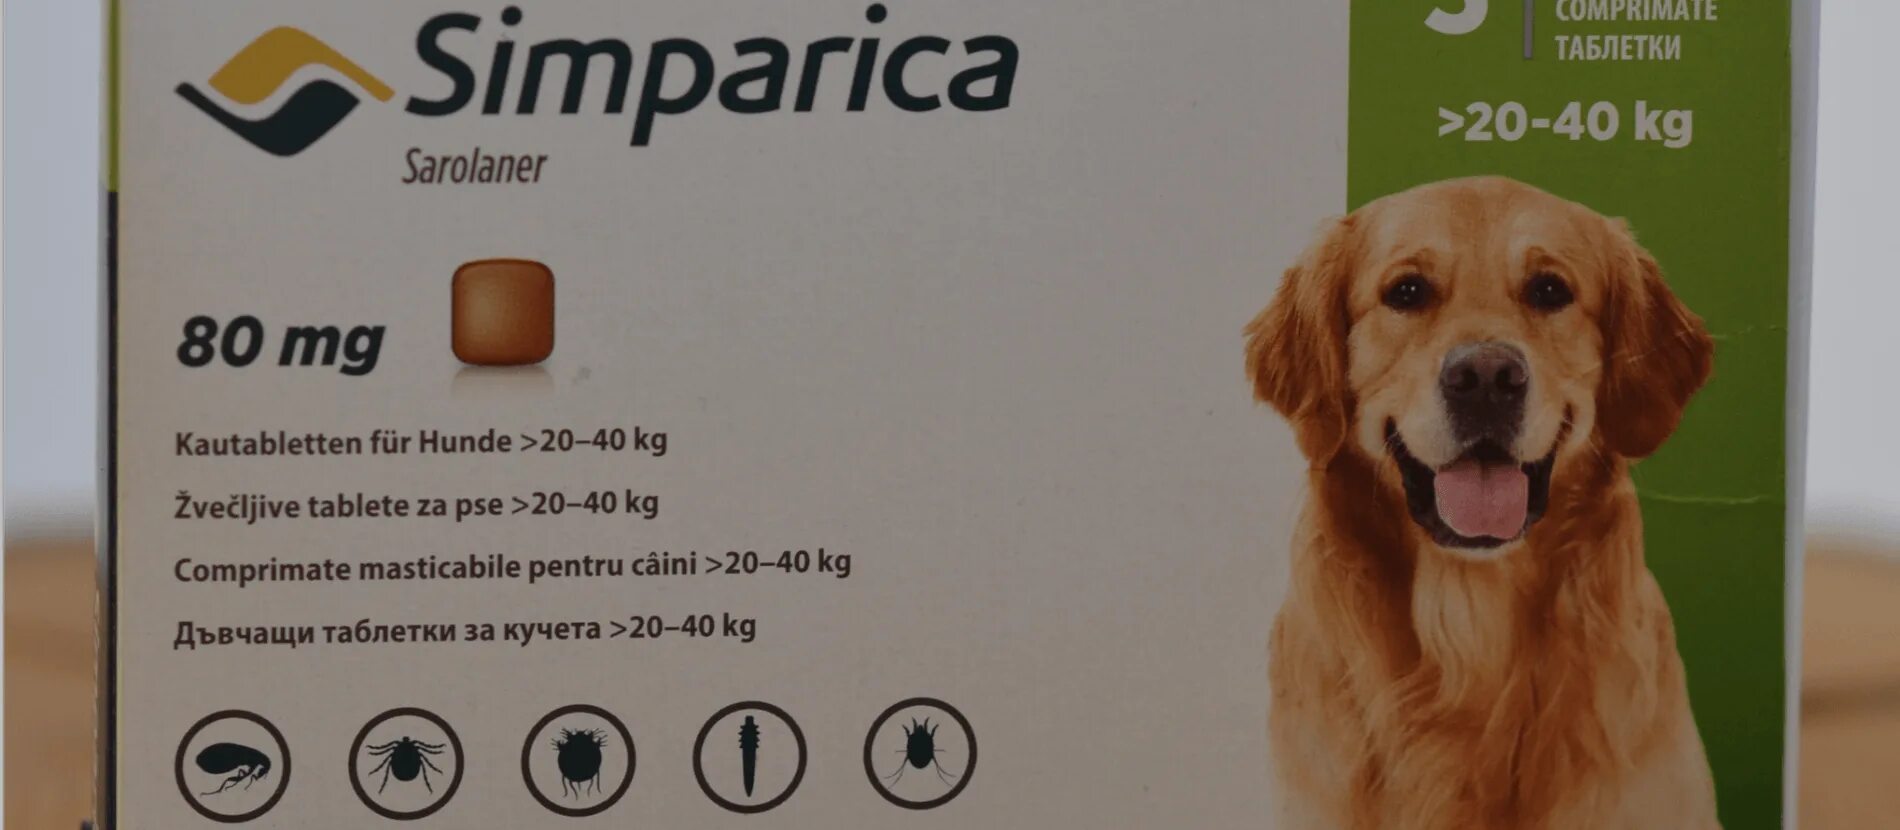 Симпарика таблетка для собак спб. Симпарика таблетка для собак 20-40 кг. Бравекто 20-40 кг таблетки Симпарика 20-40 кг. Симпарика для собак весом 20-40 кг. Симпарика до 20 кг для собак.